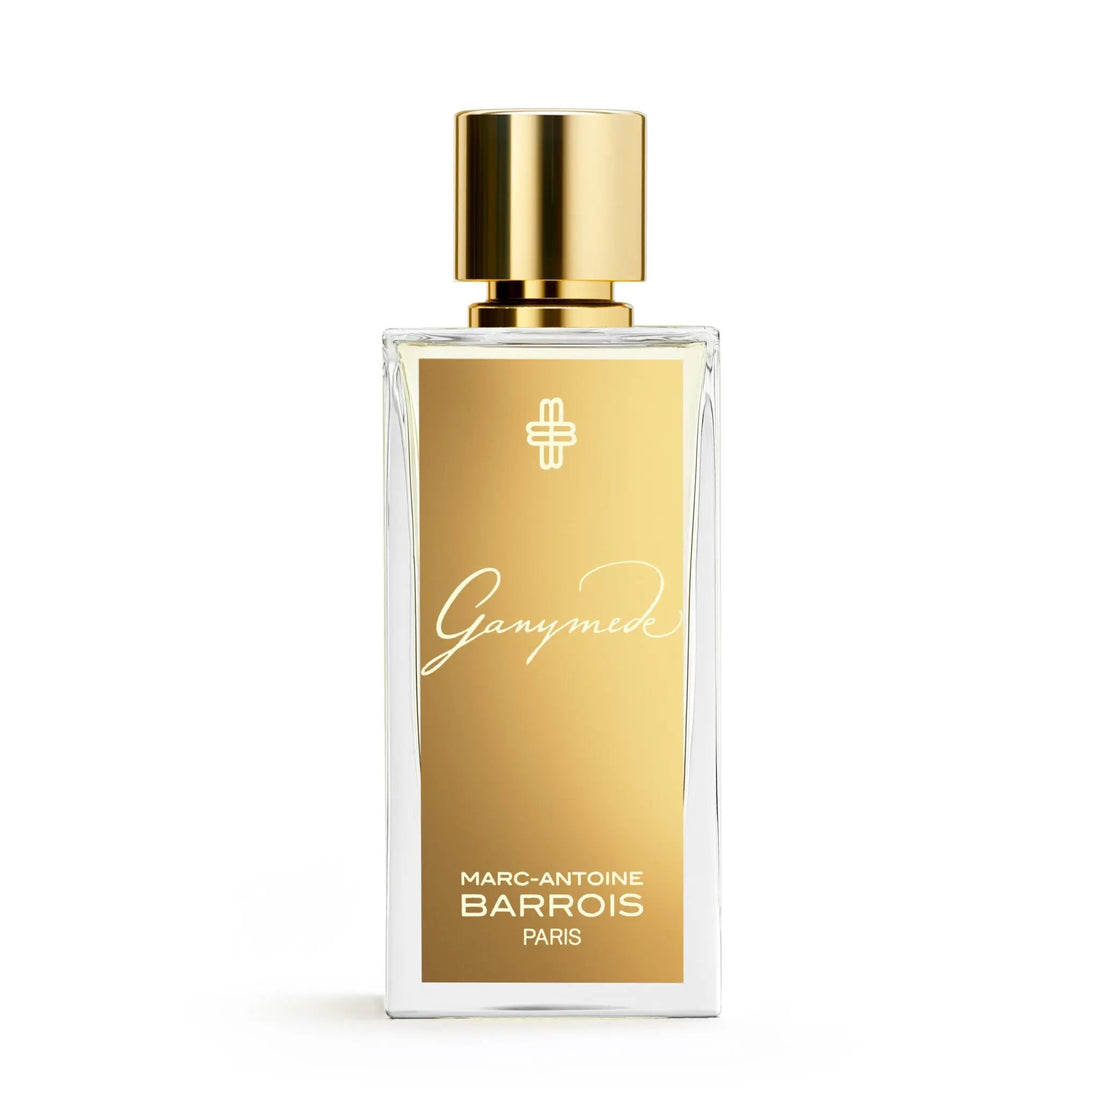 Barrois Ganymede eau de parfum - 100 ml